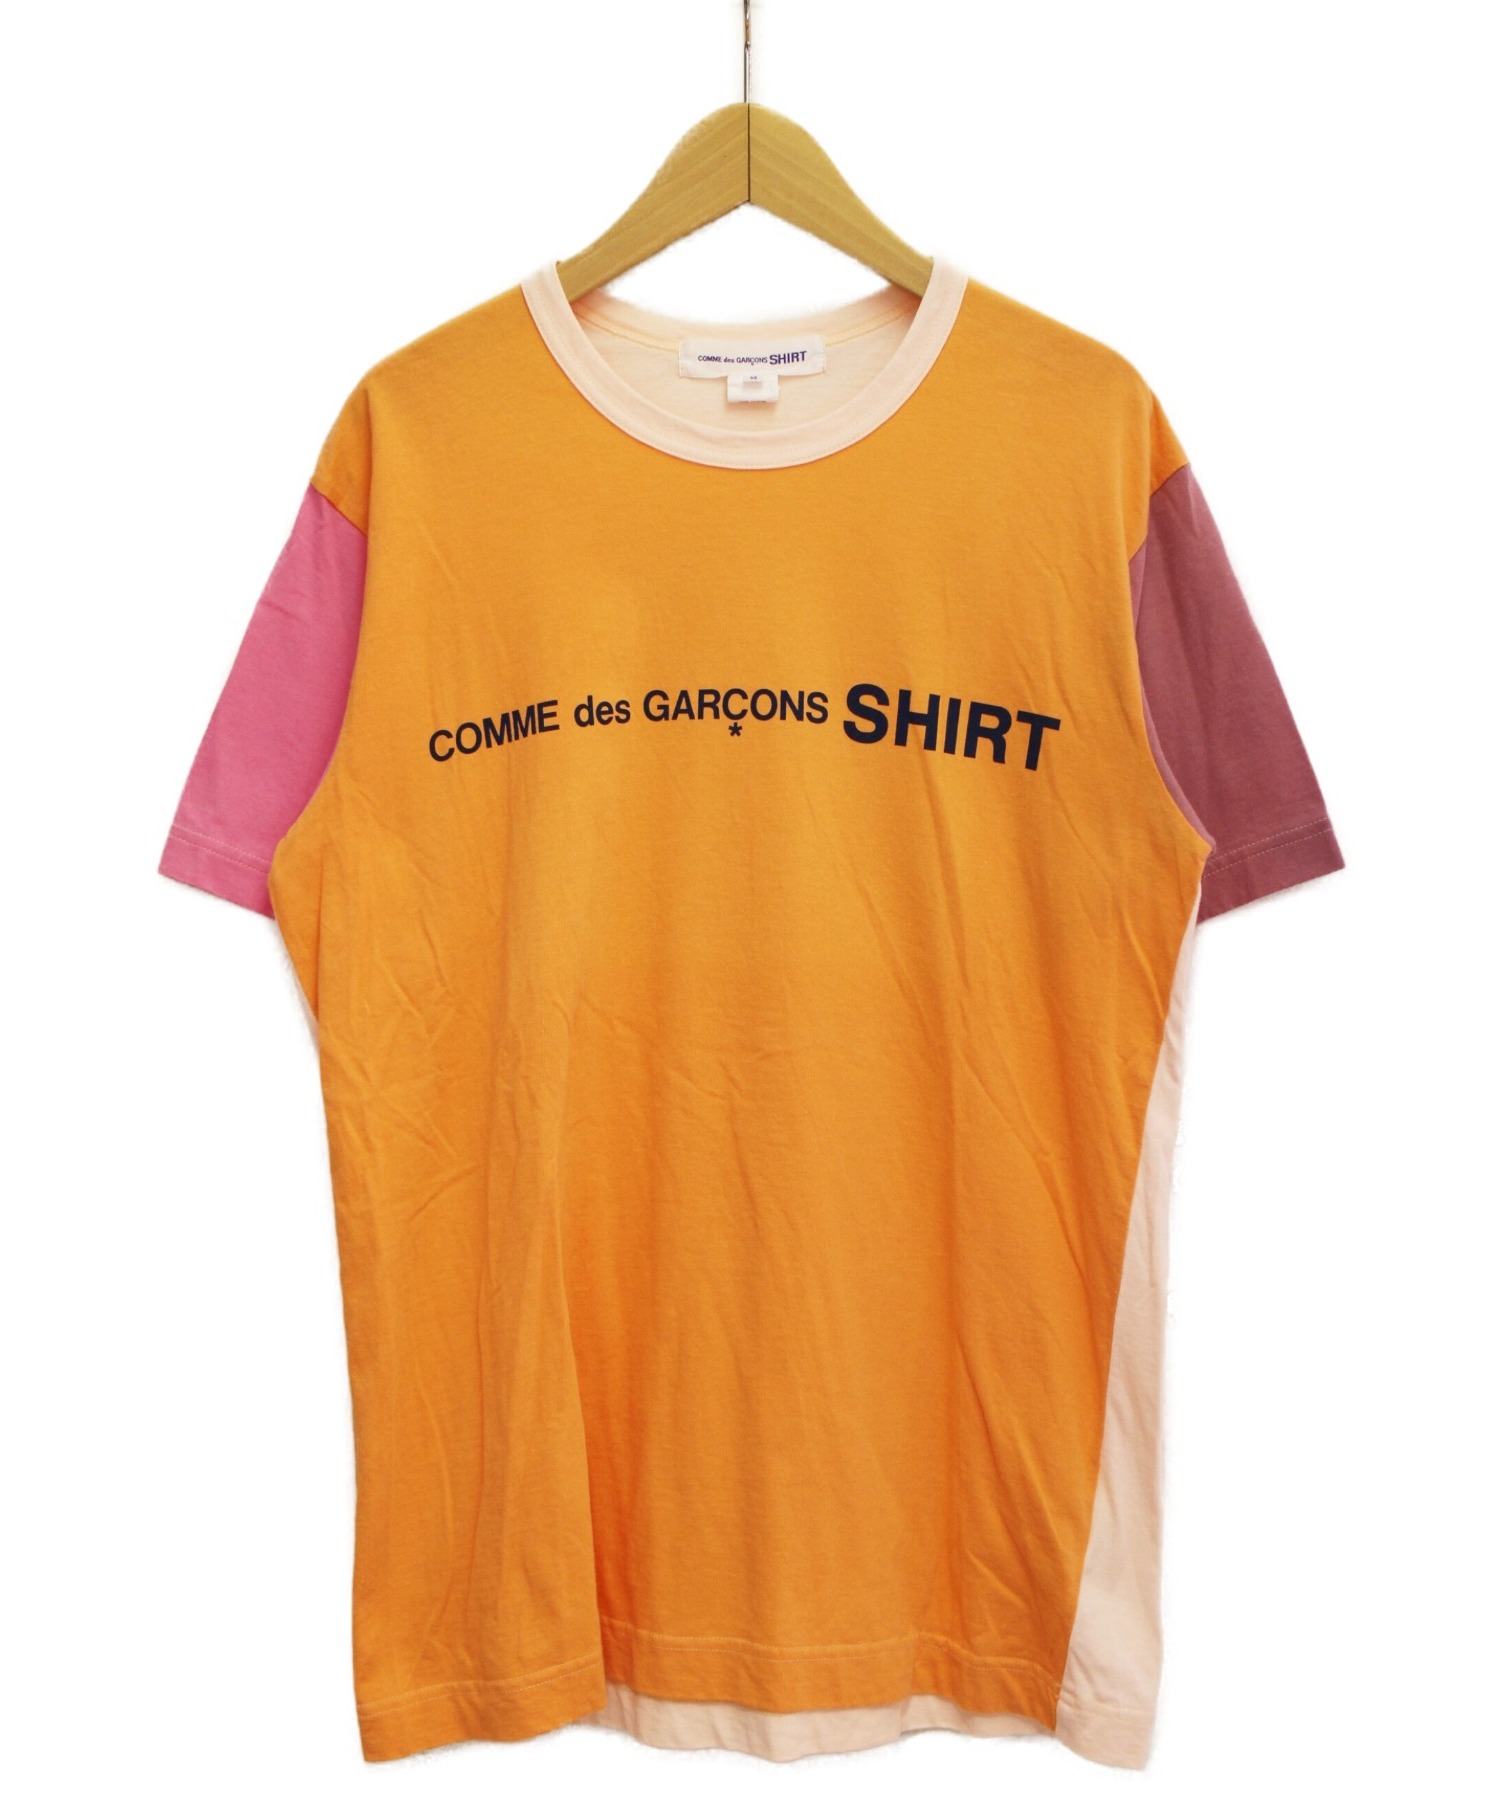 COMME des GARCONS SHIRT (コムデギャルソンシャツ) 切替Tシャツ マルチカラー サイズ:M